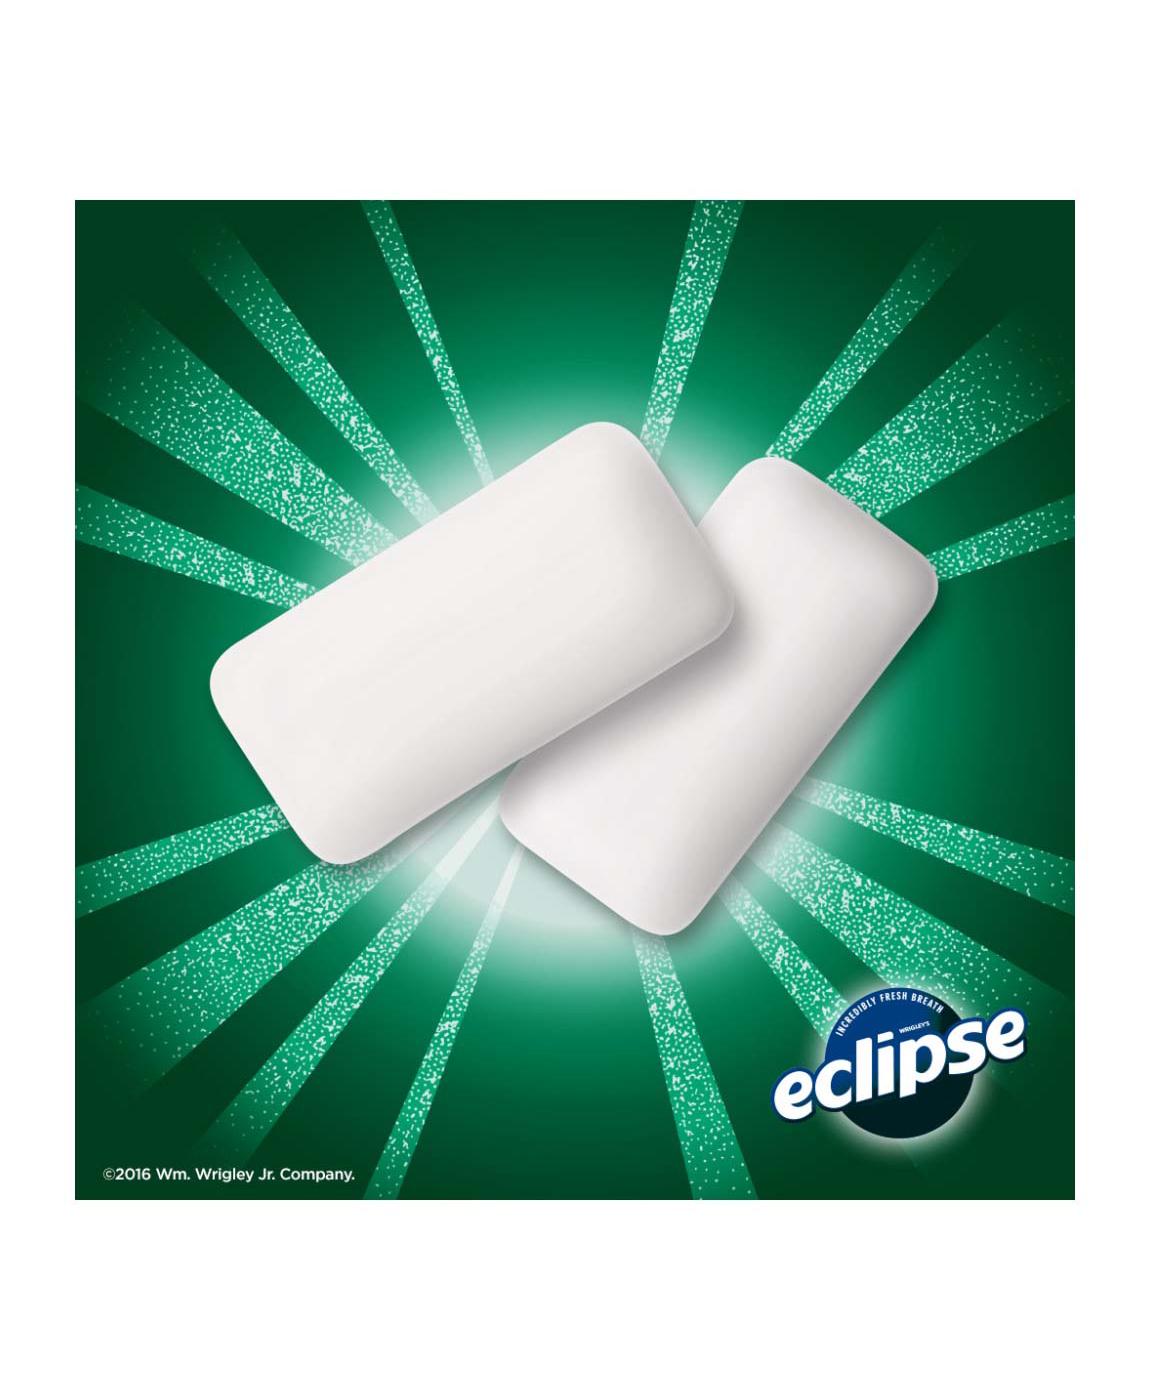 Eclipse Spearmint Sugar Free Gum; image 6 of 7